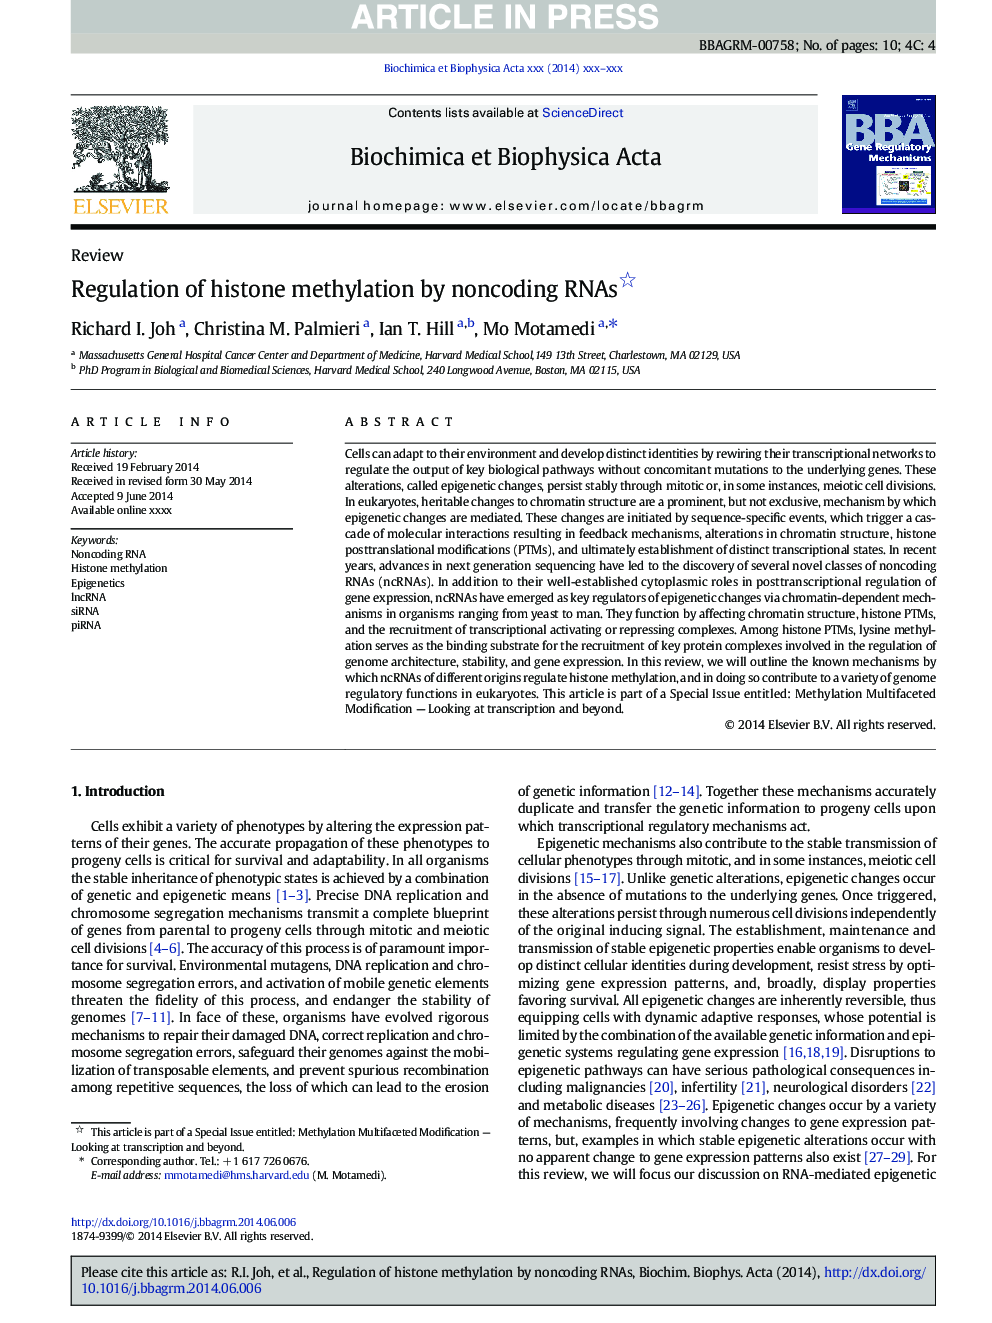 Regulation of histone methylation by noncoding RNAs